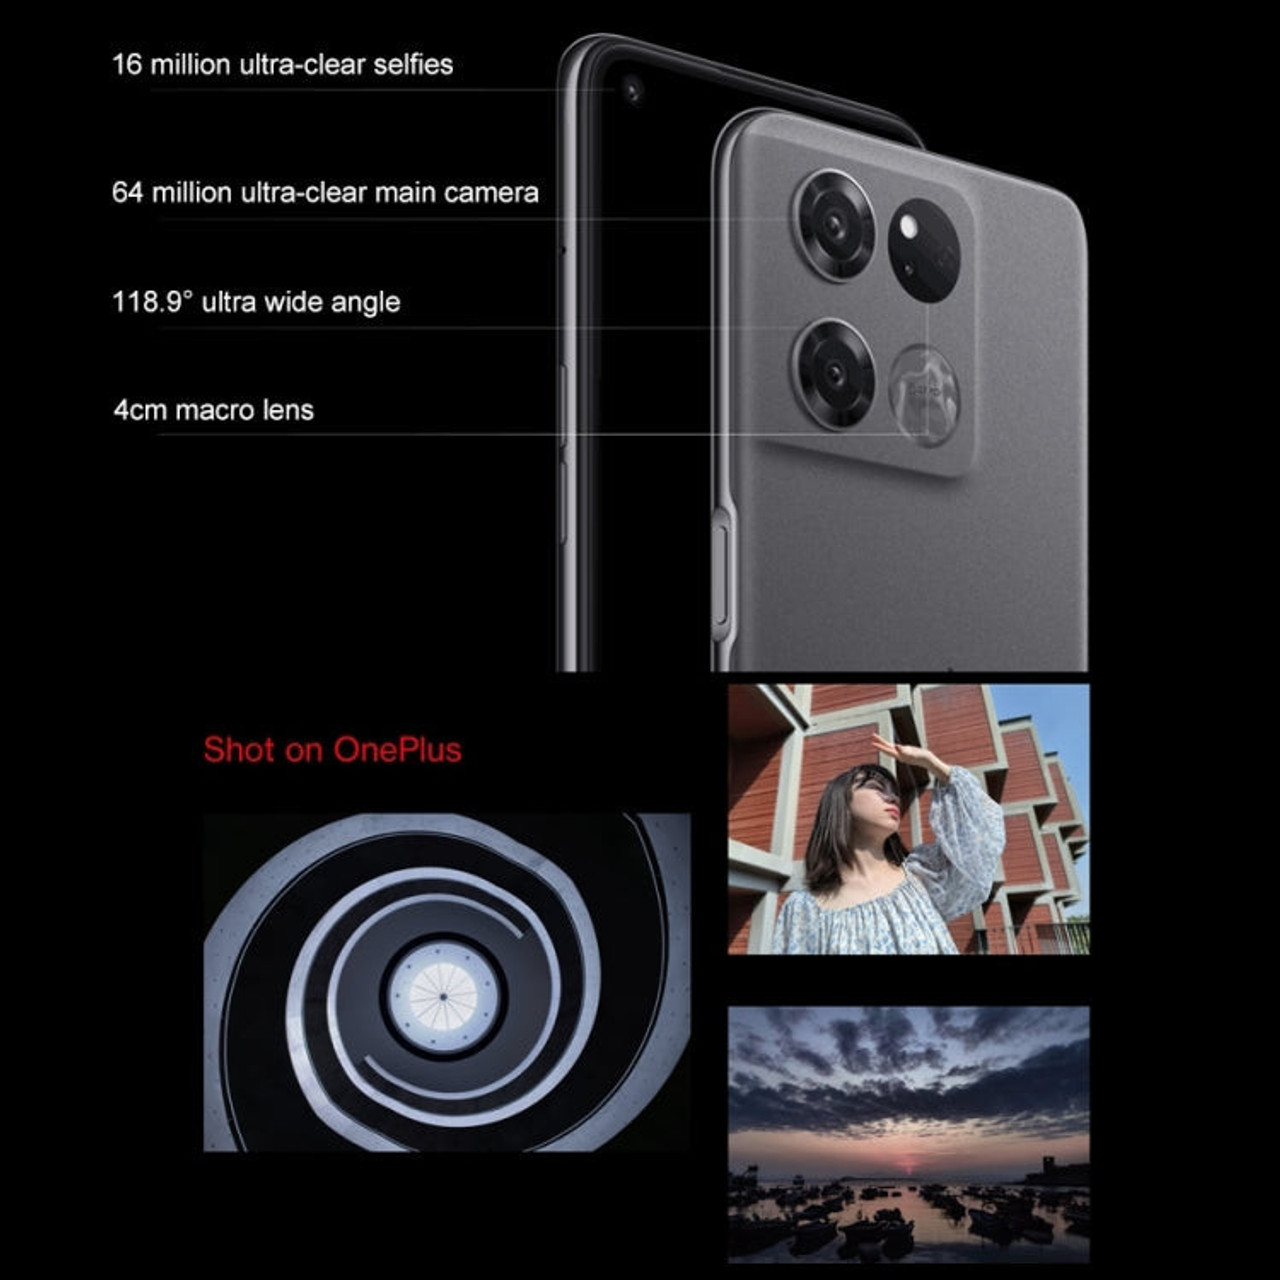 OnePlus Ace Racing 5G, 64MP Camera, 12GB+256GB